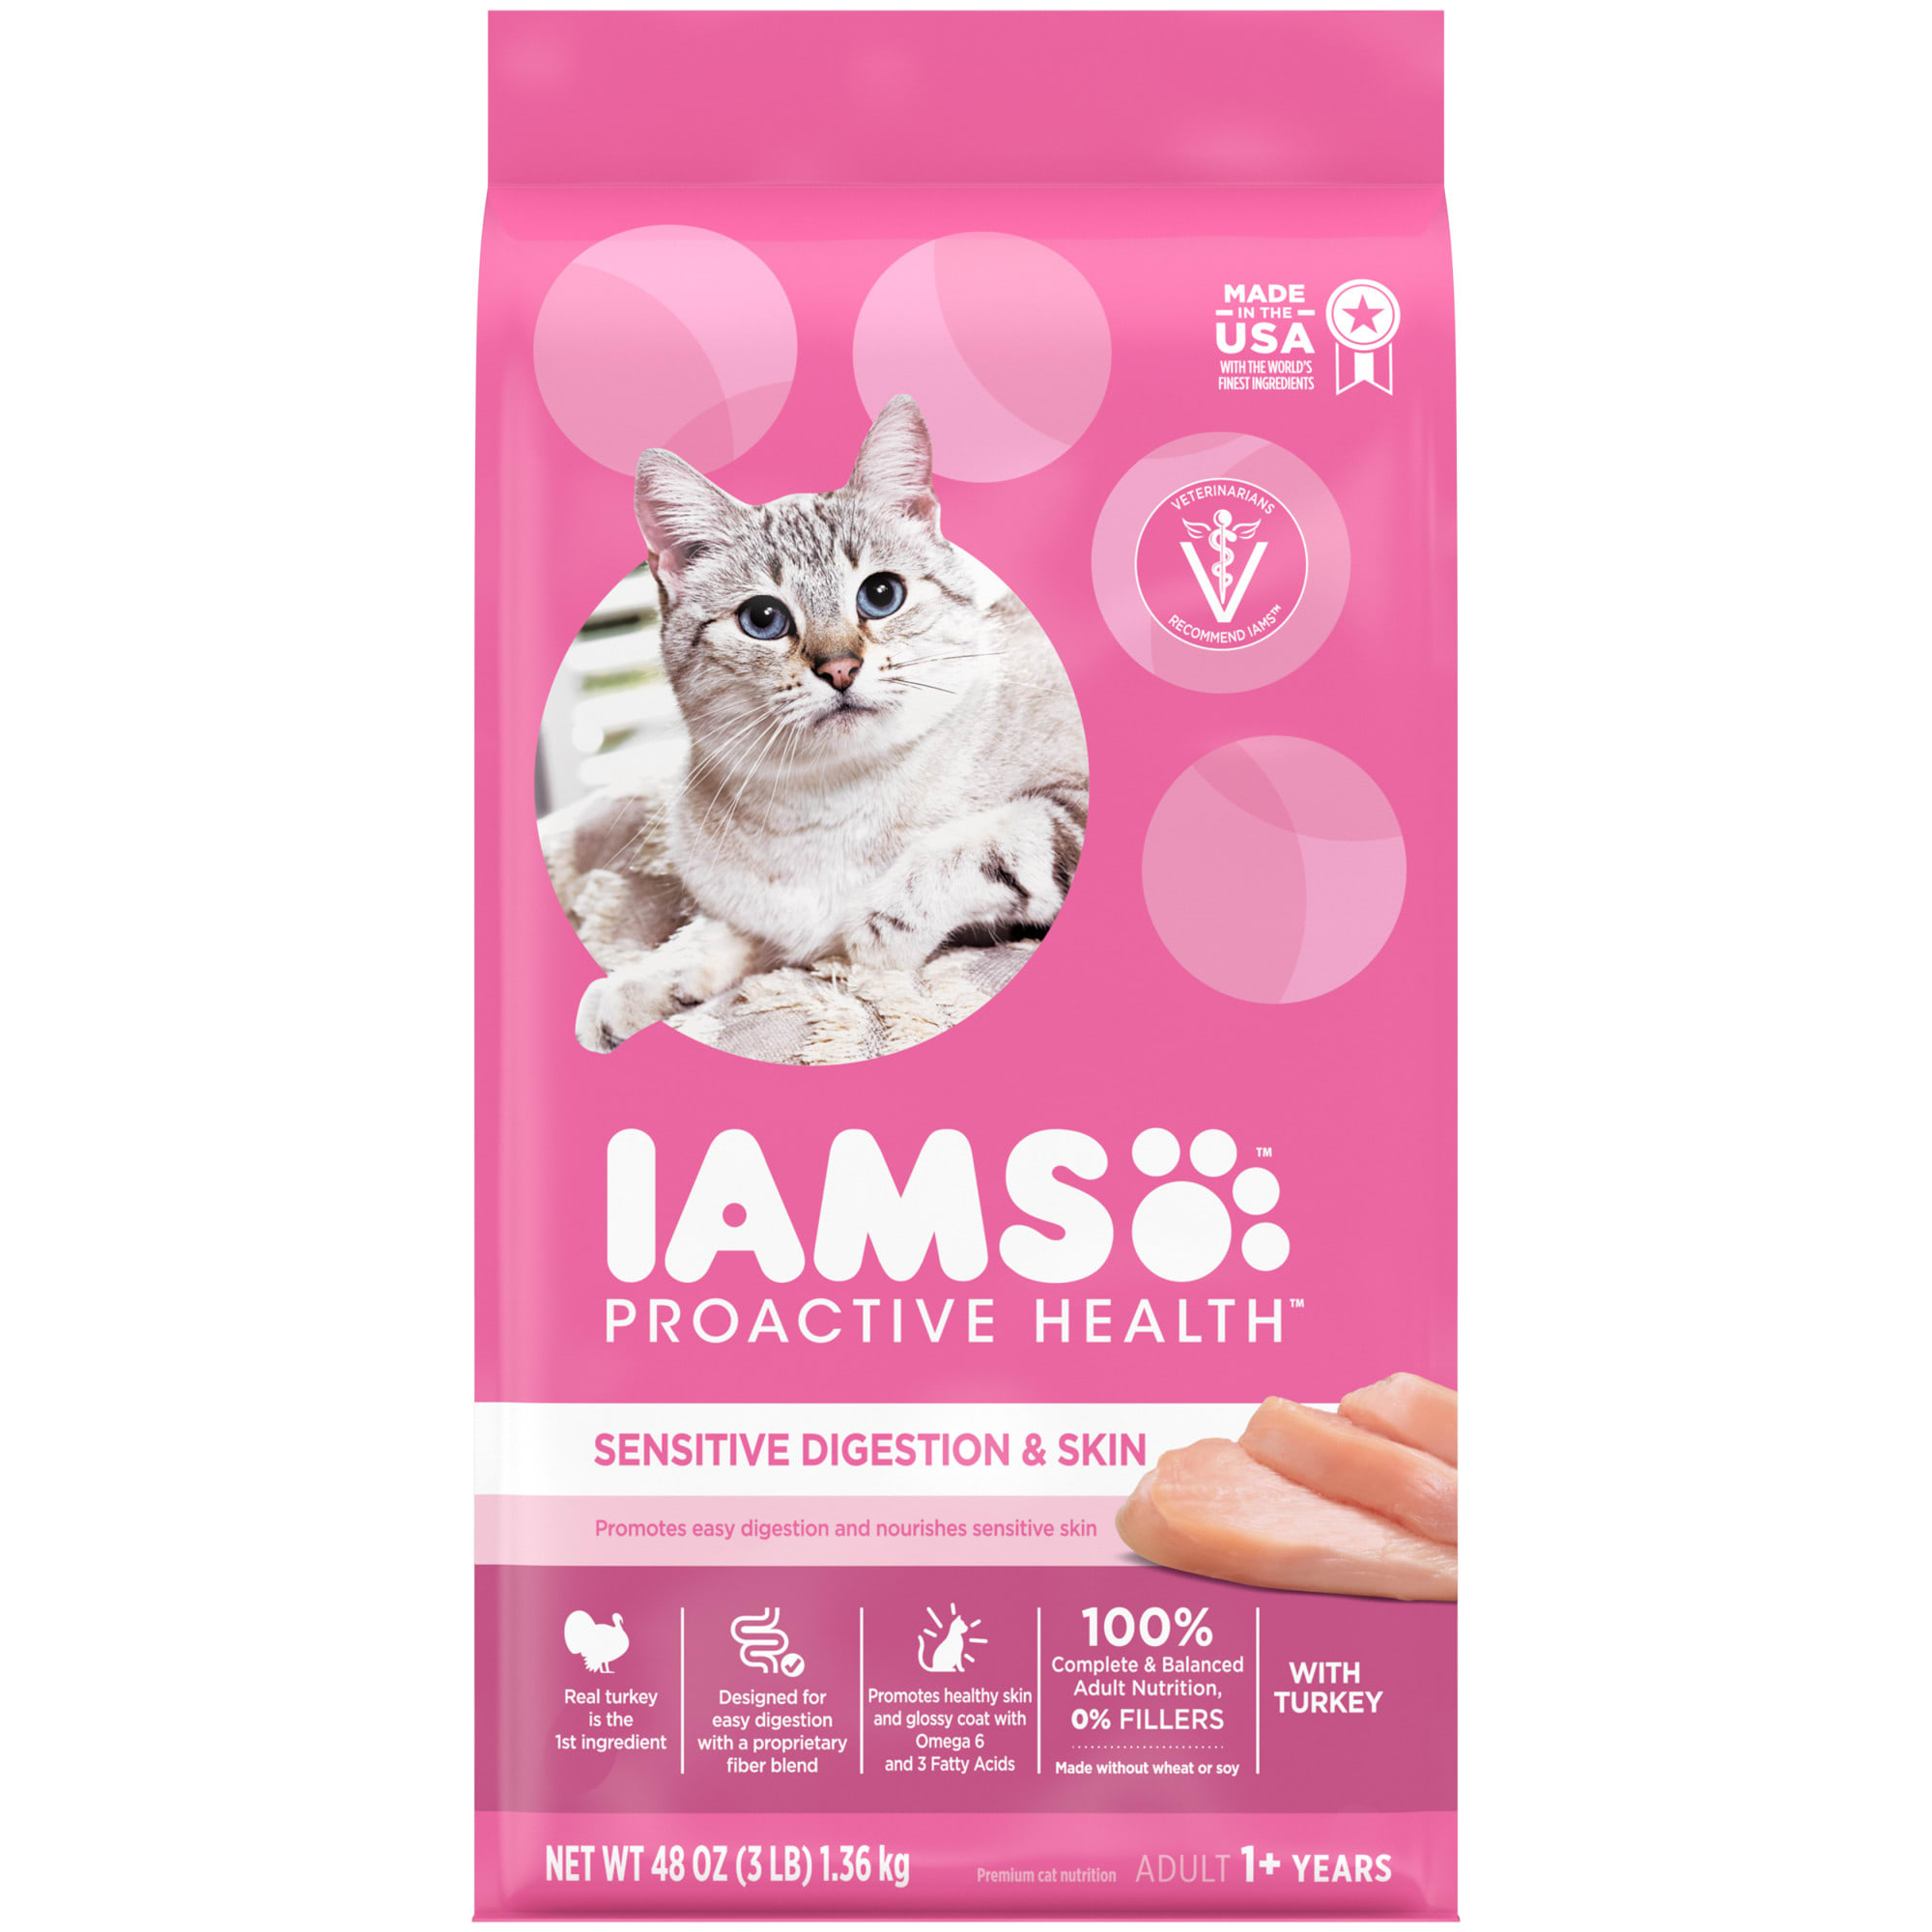 UPC 019014805105 product image for Iams ProActive Health Sensitive Digestion & Skin Turkey Adult Dry Cat Food, 3 lb | upcitemdb.com